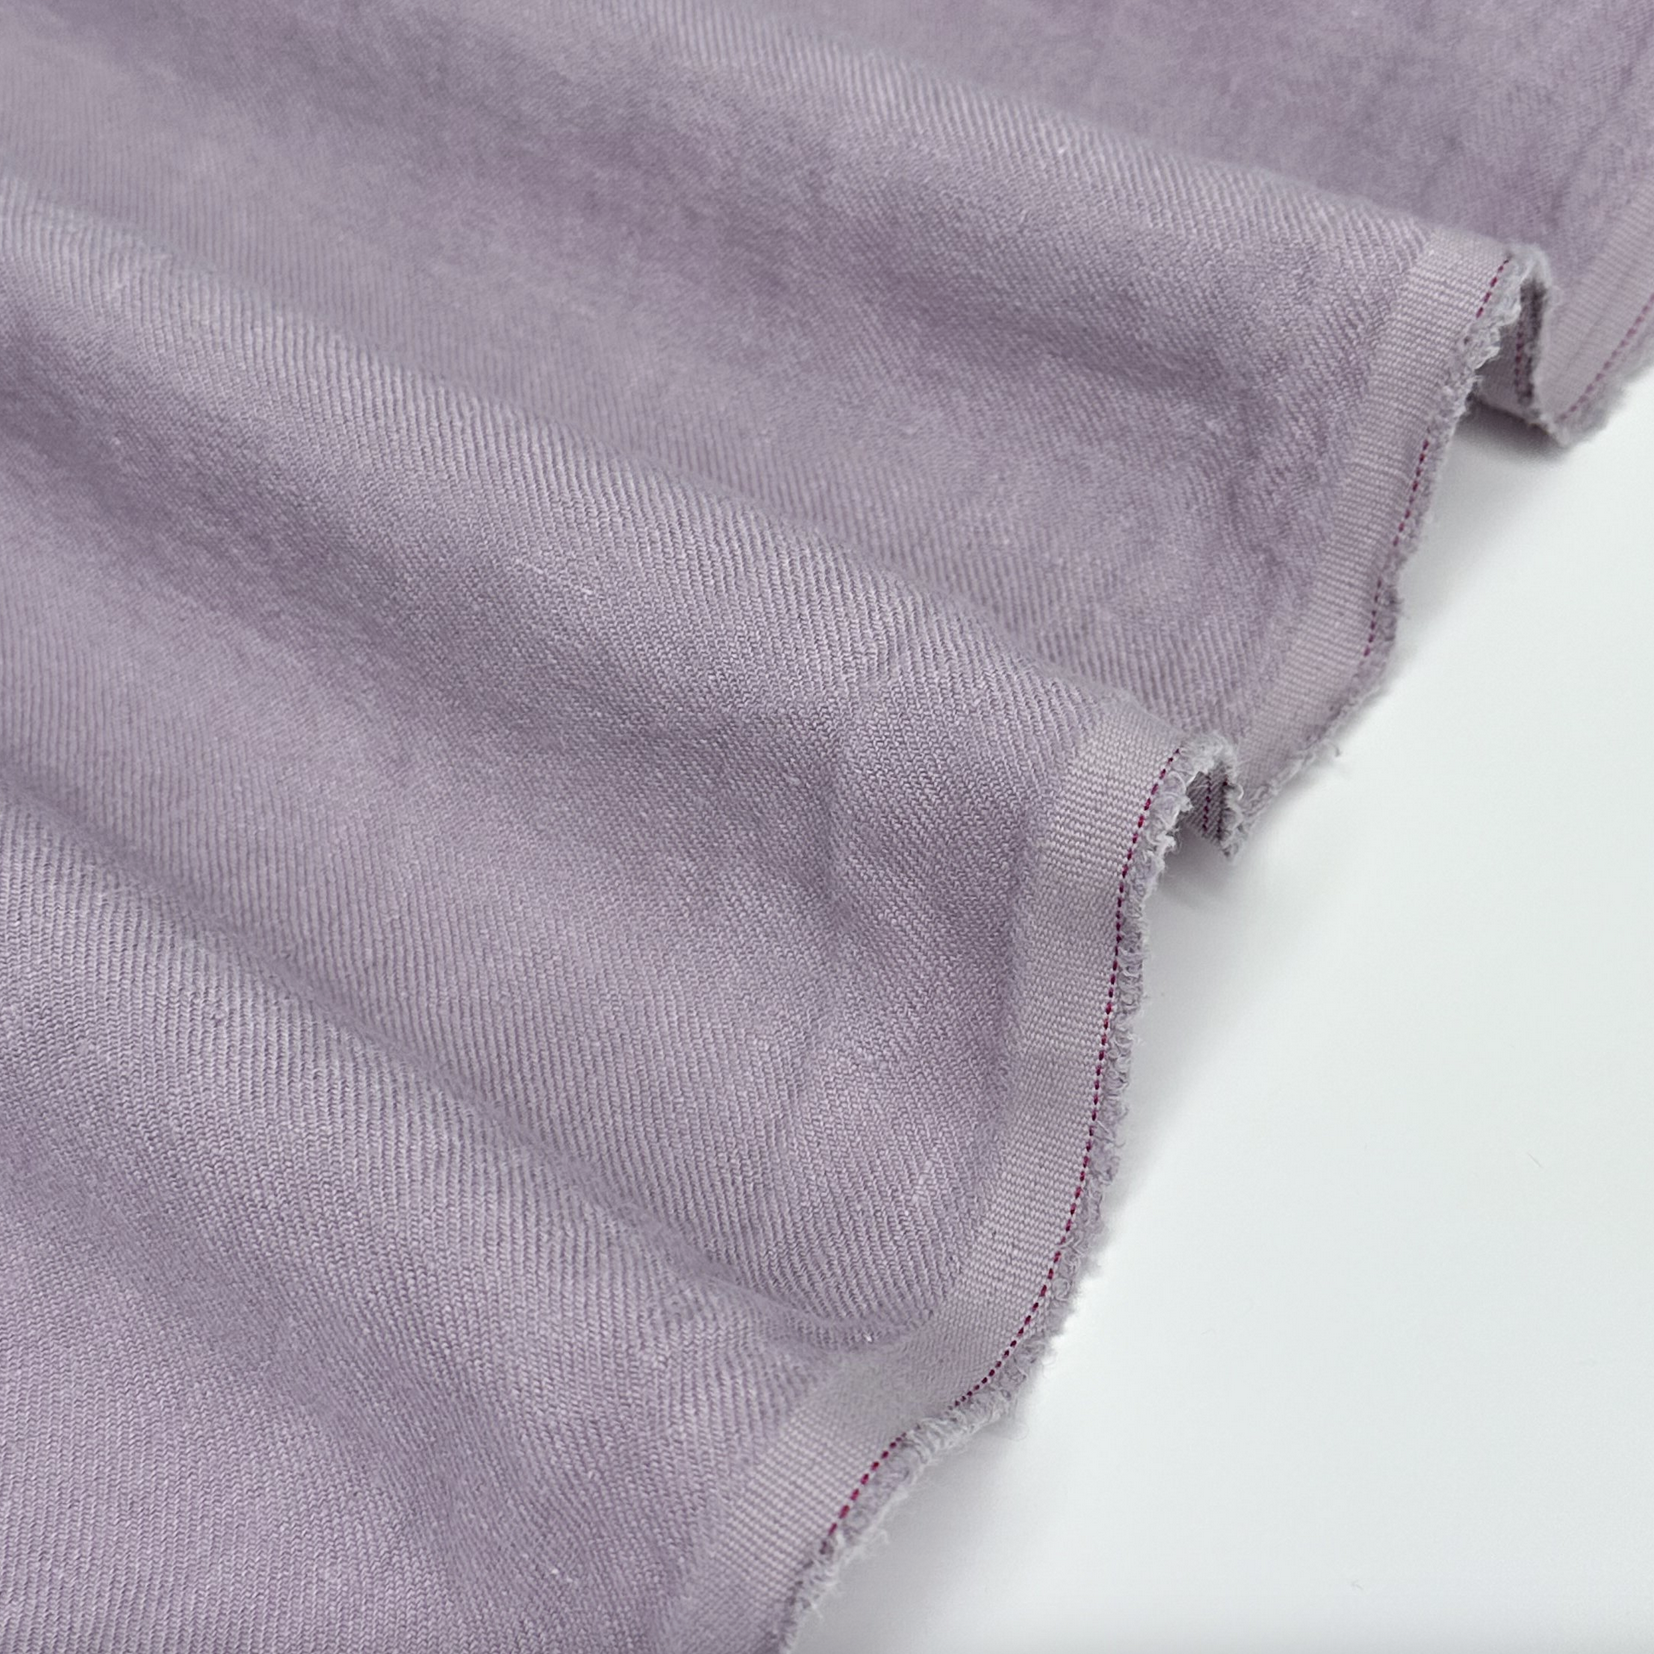 Gordon Fabrics Ltd. Nomad Linen Twill Lilac